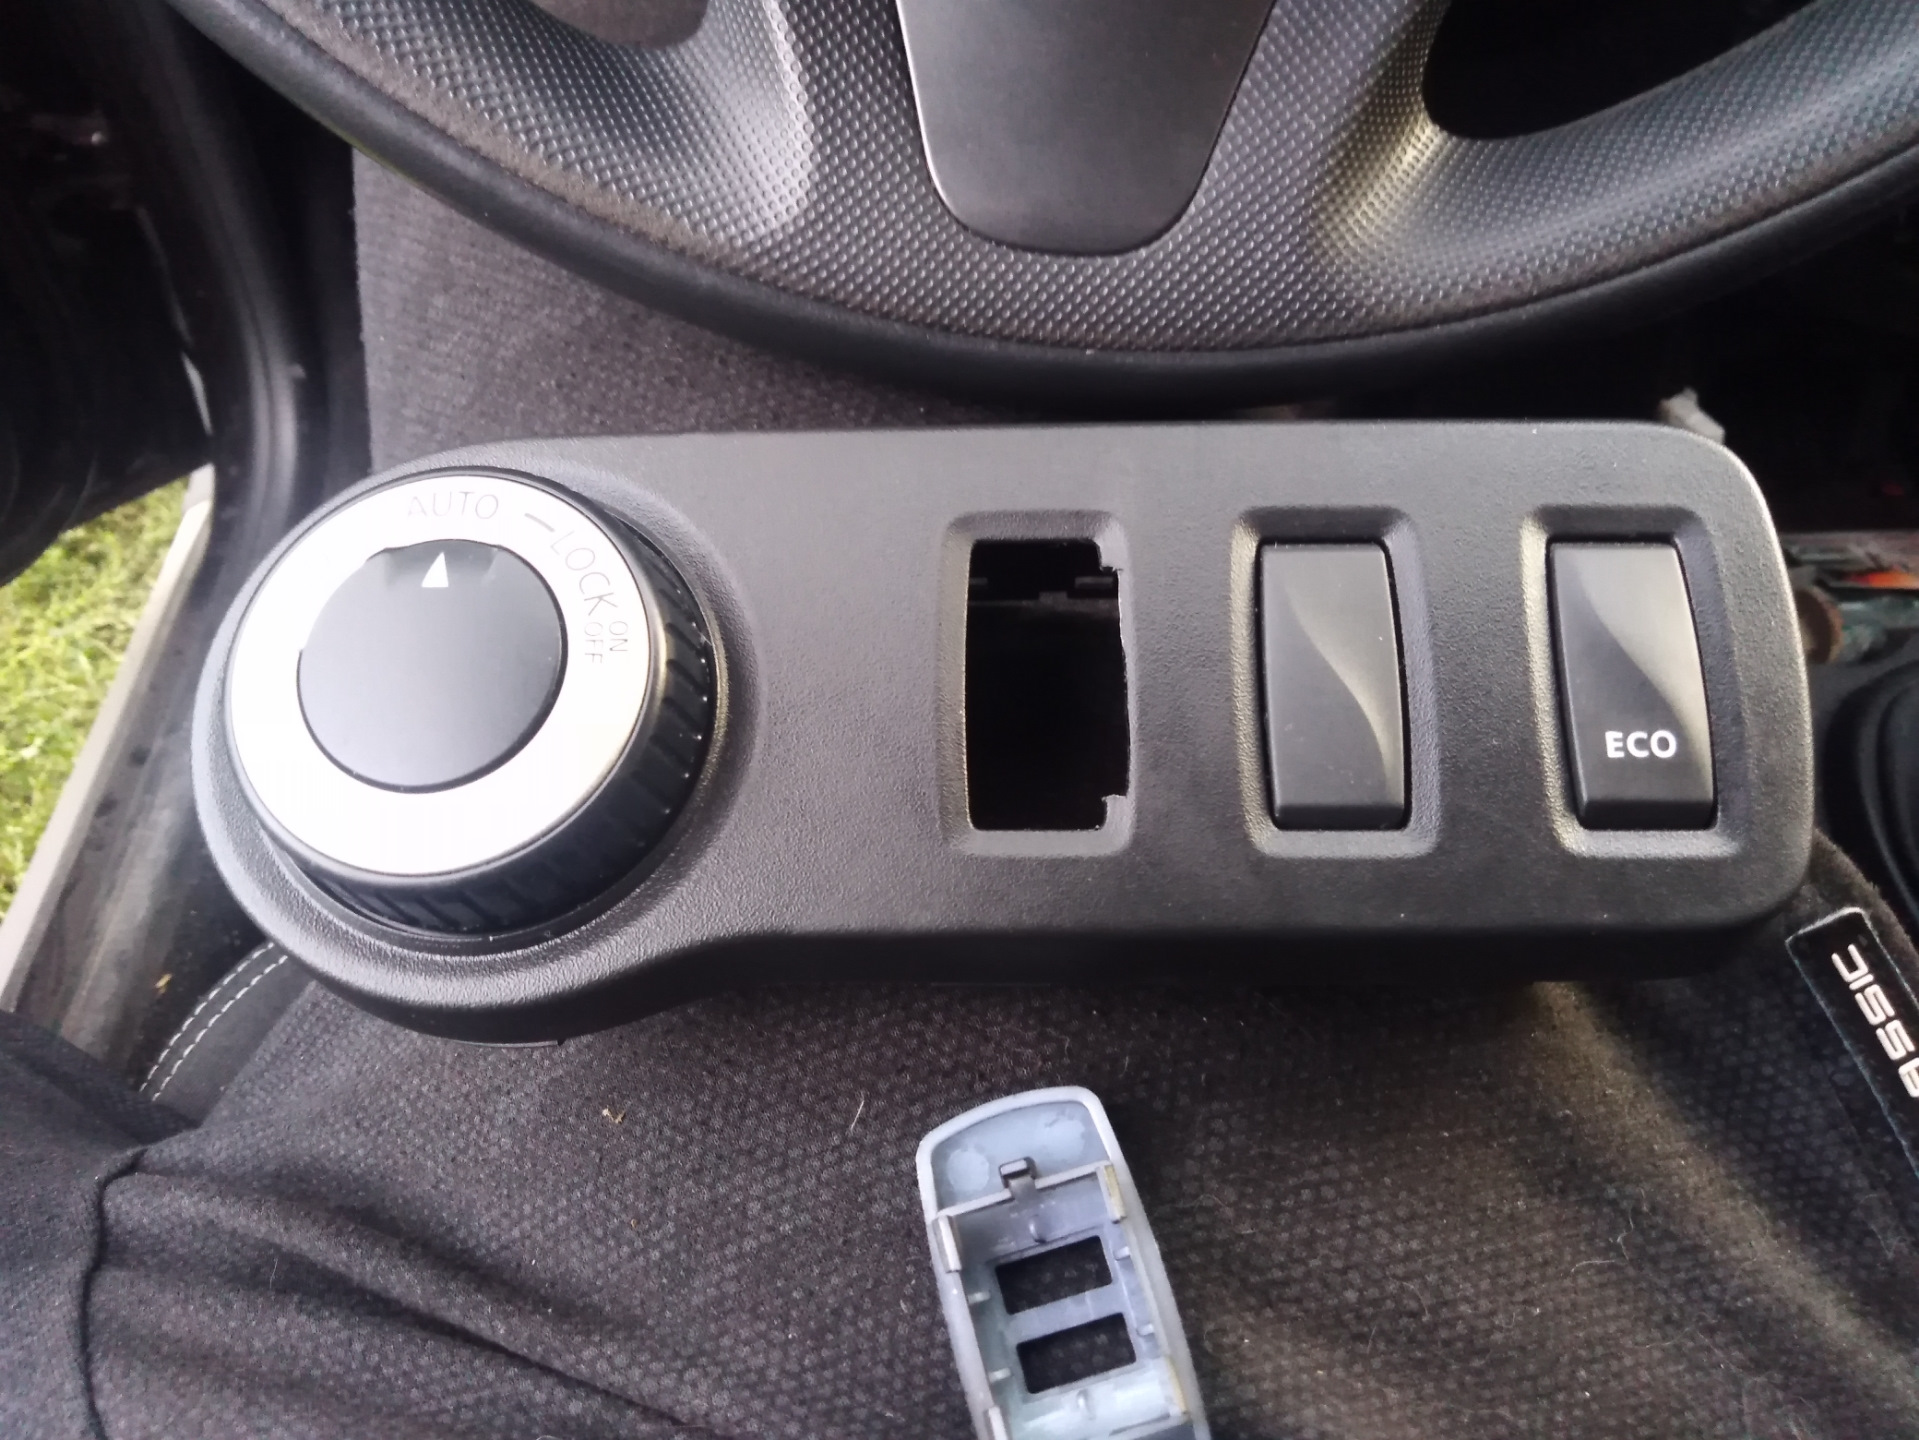 Кнопки дастер купить. USB заглушка Renault Duster. USB розетка в Рено Дастер 1. USB разъем Renault Duster 2021. Доп USB Renault Duster.